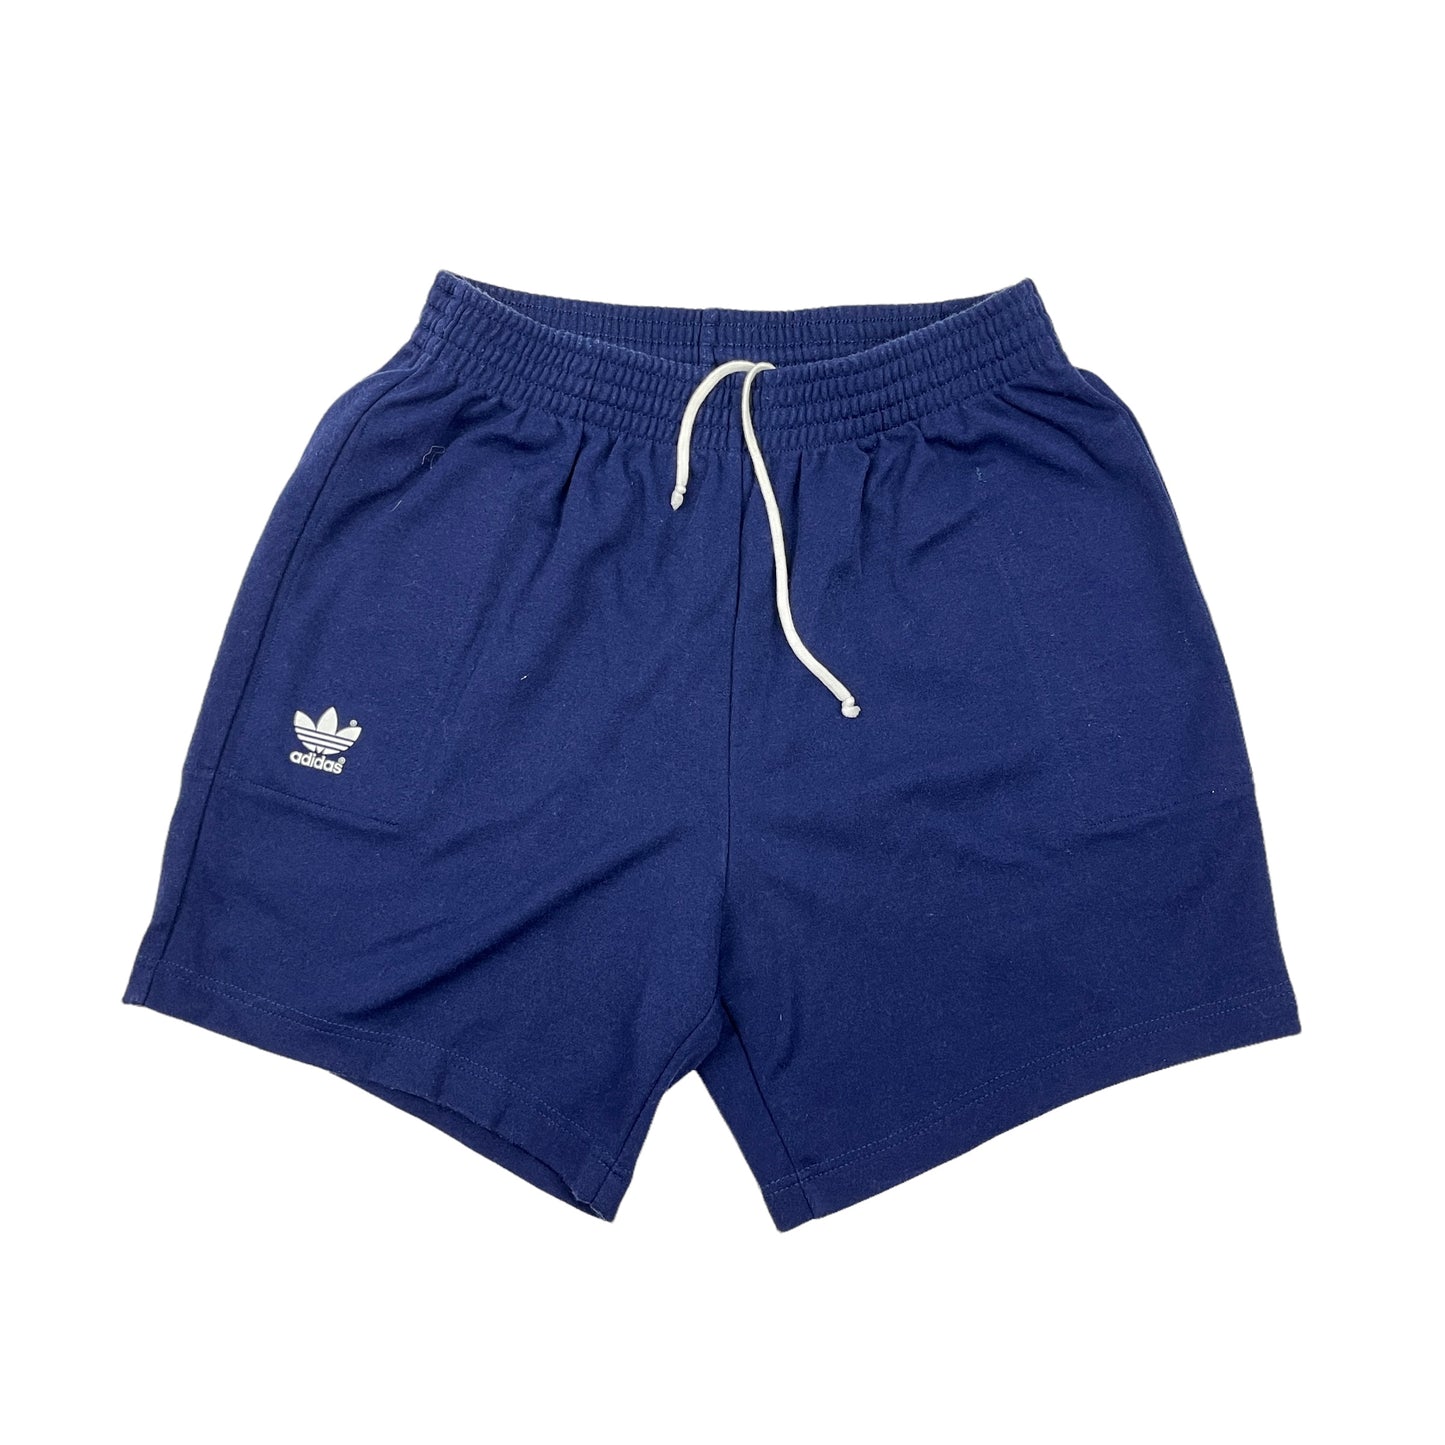 0887 Adidas Vintage 80s Goalie Soccer Shorts